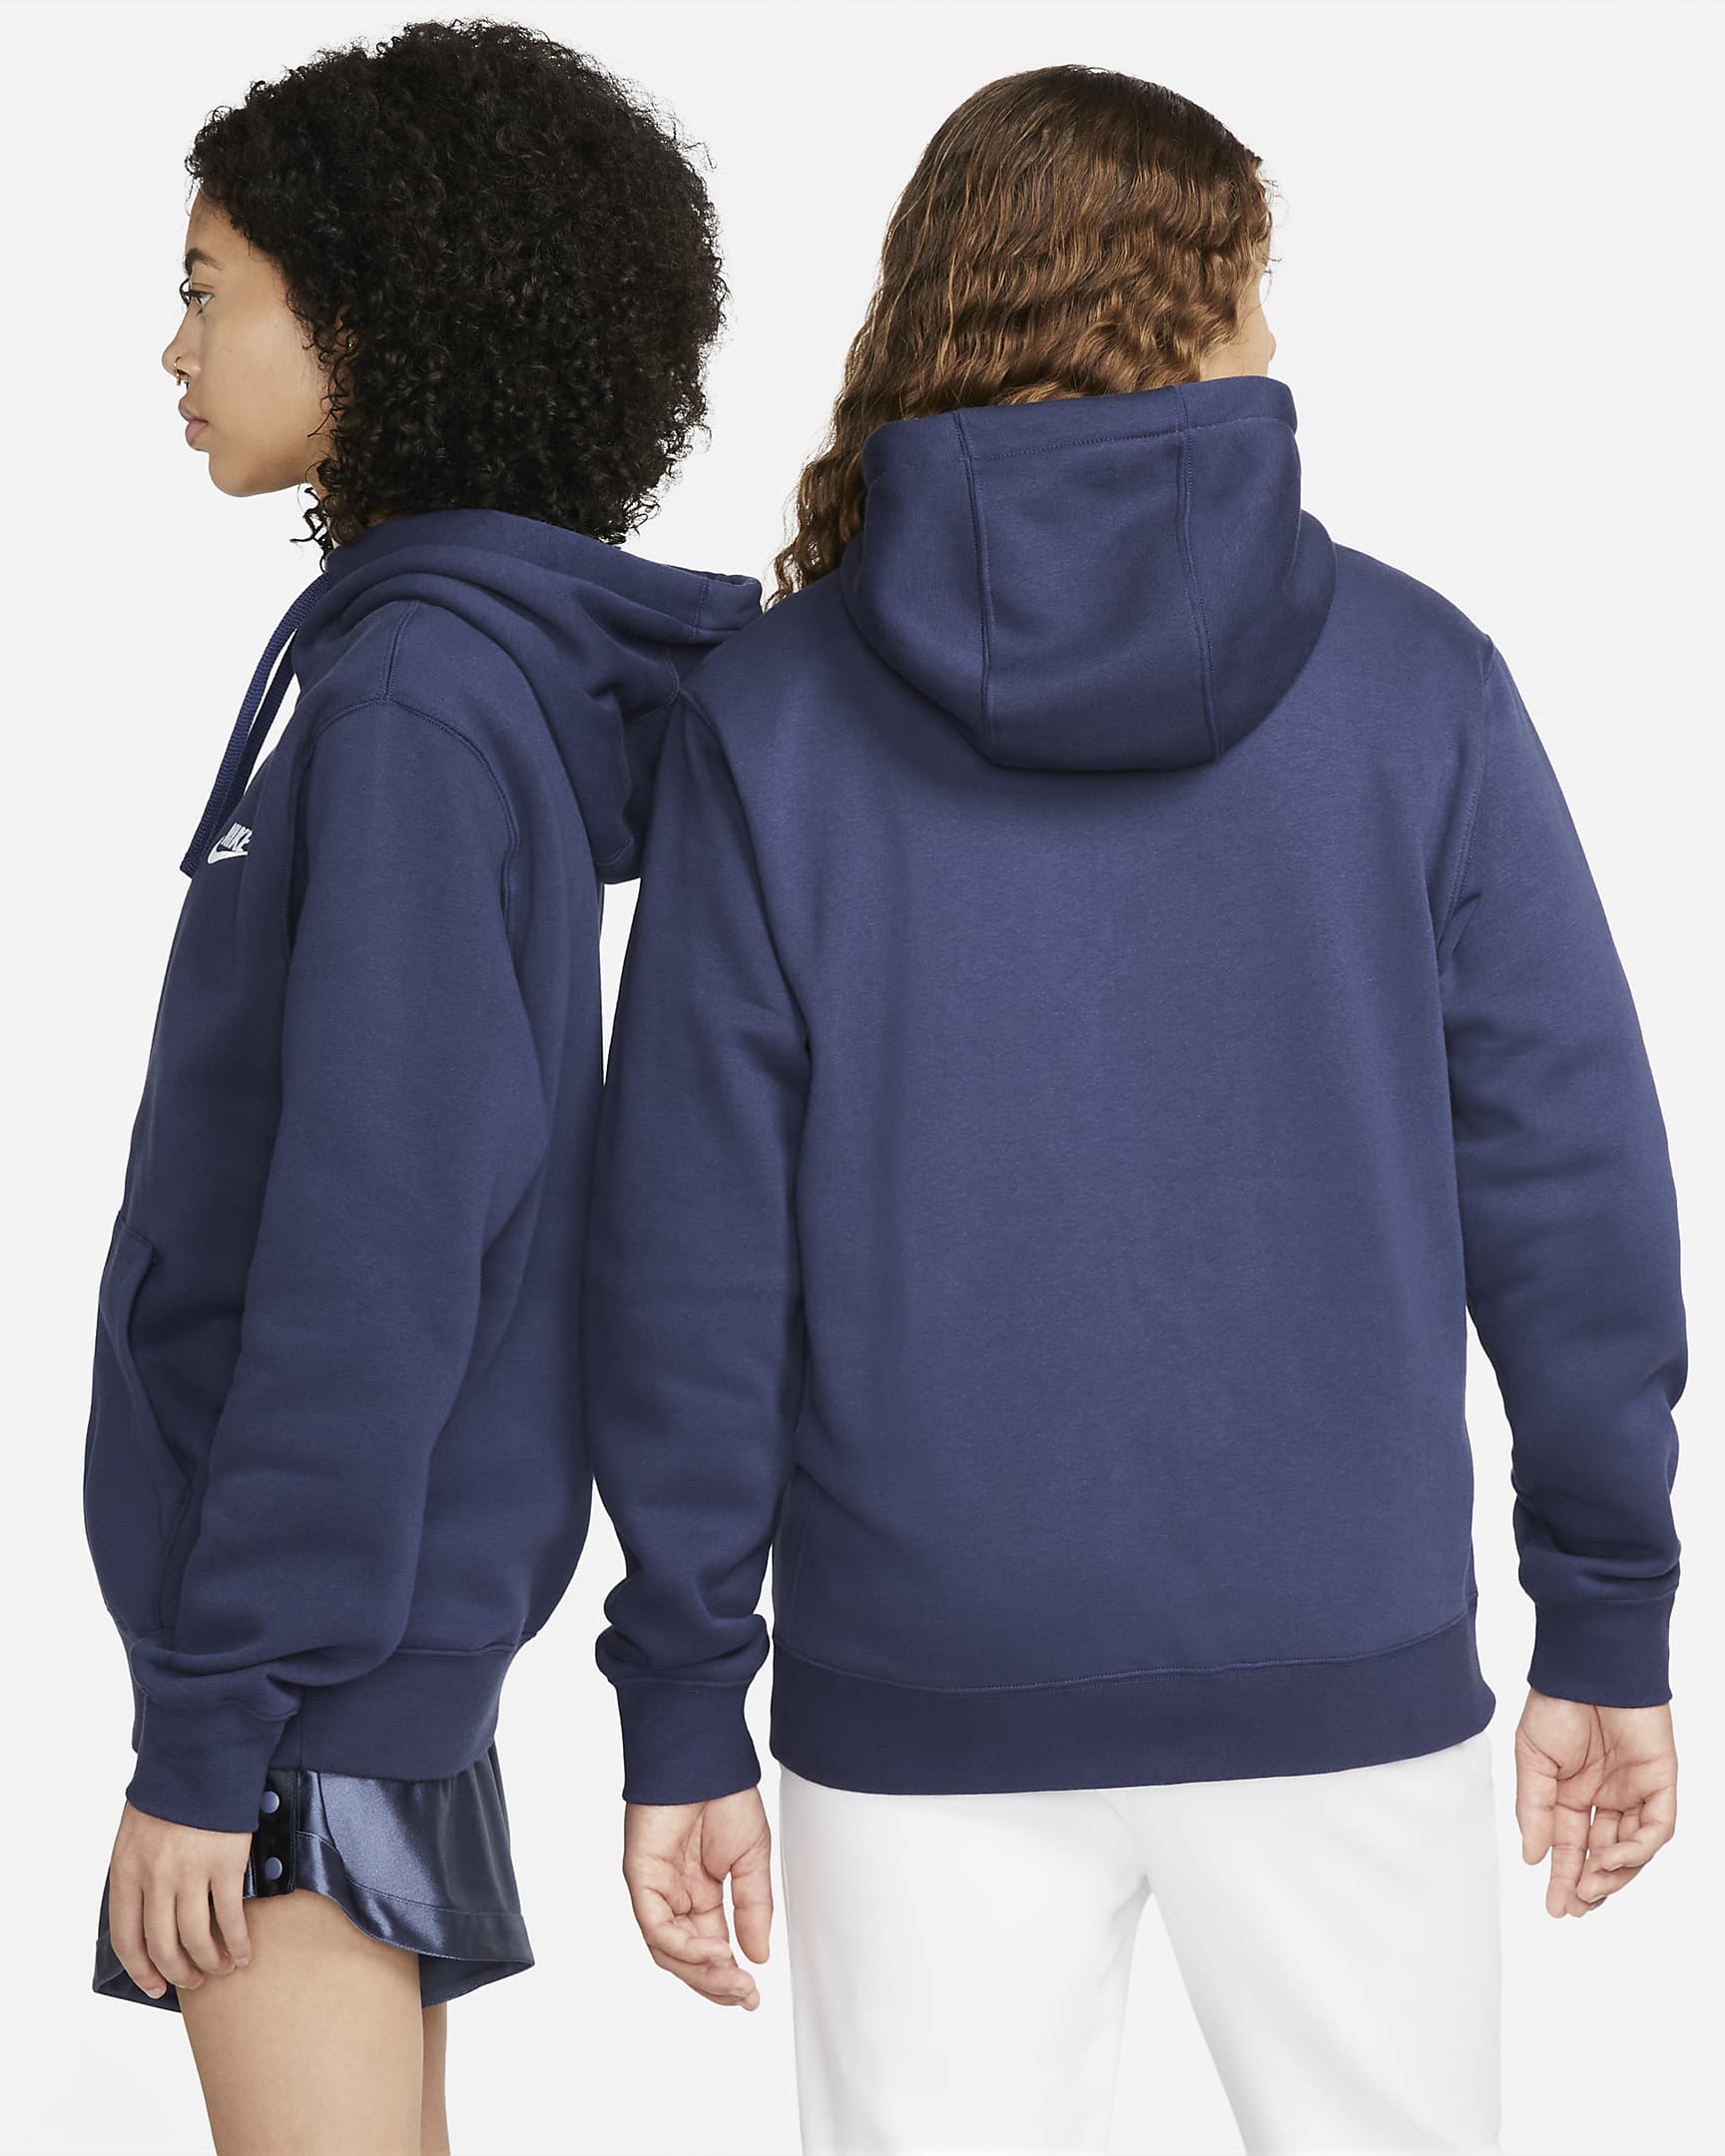 Nike Sportswear Club Fleece Men's Full-Zip Hoodie - Midnight Navy/Midnight Navy/White